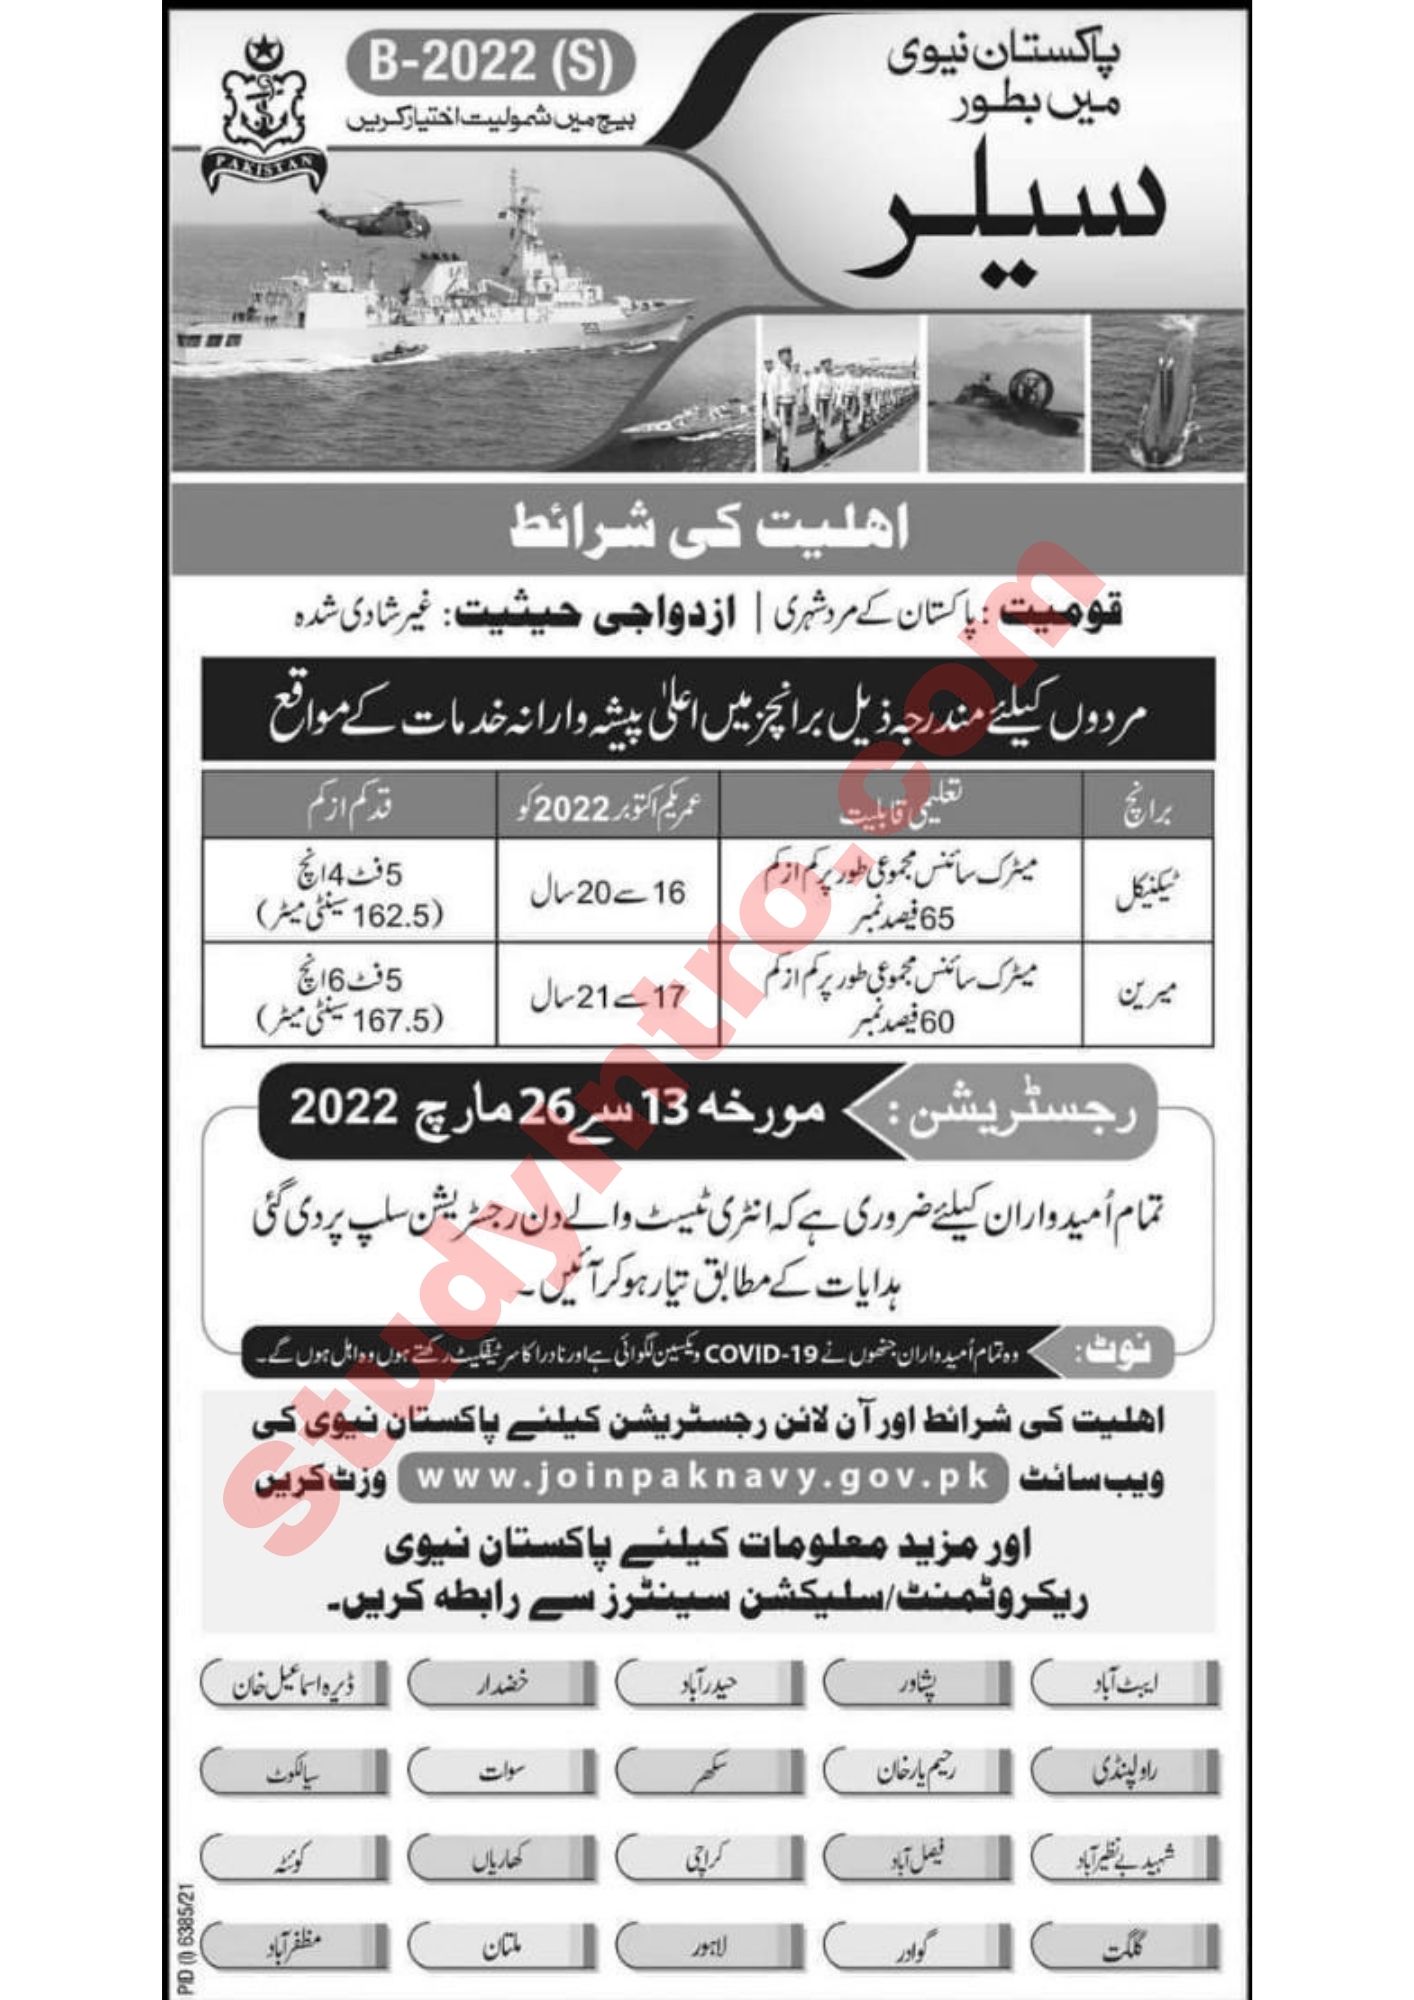 Government Jobs in Pakistan Navy 2022